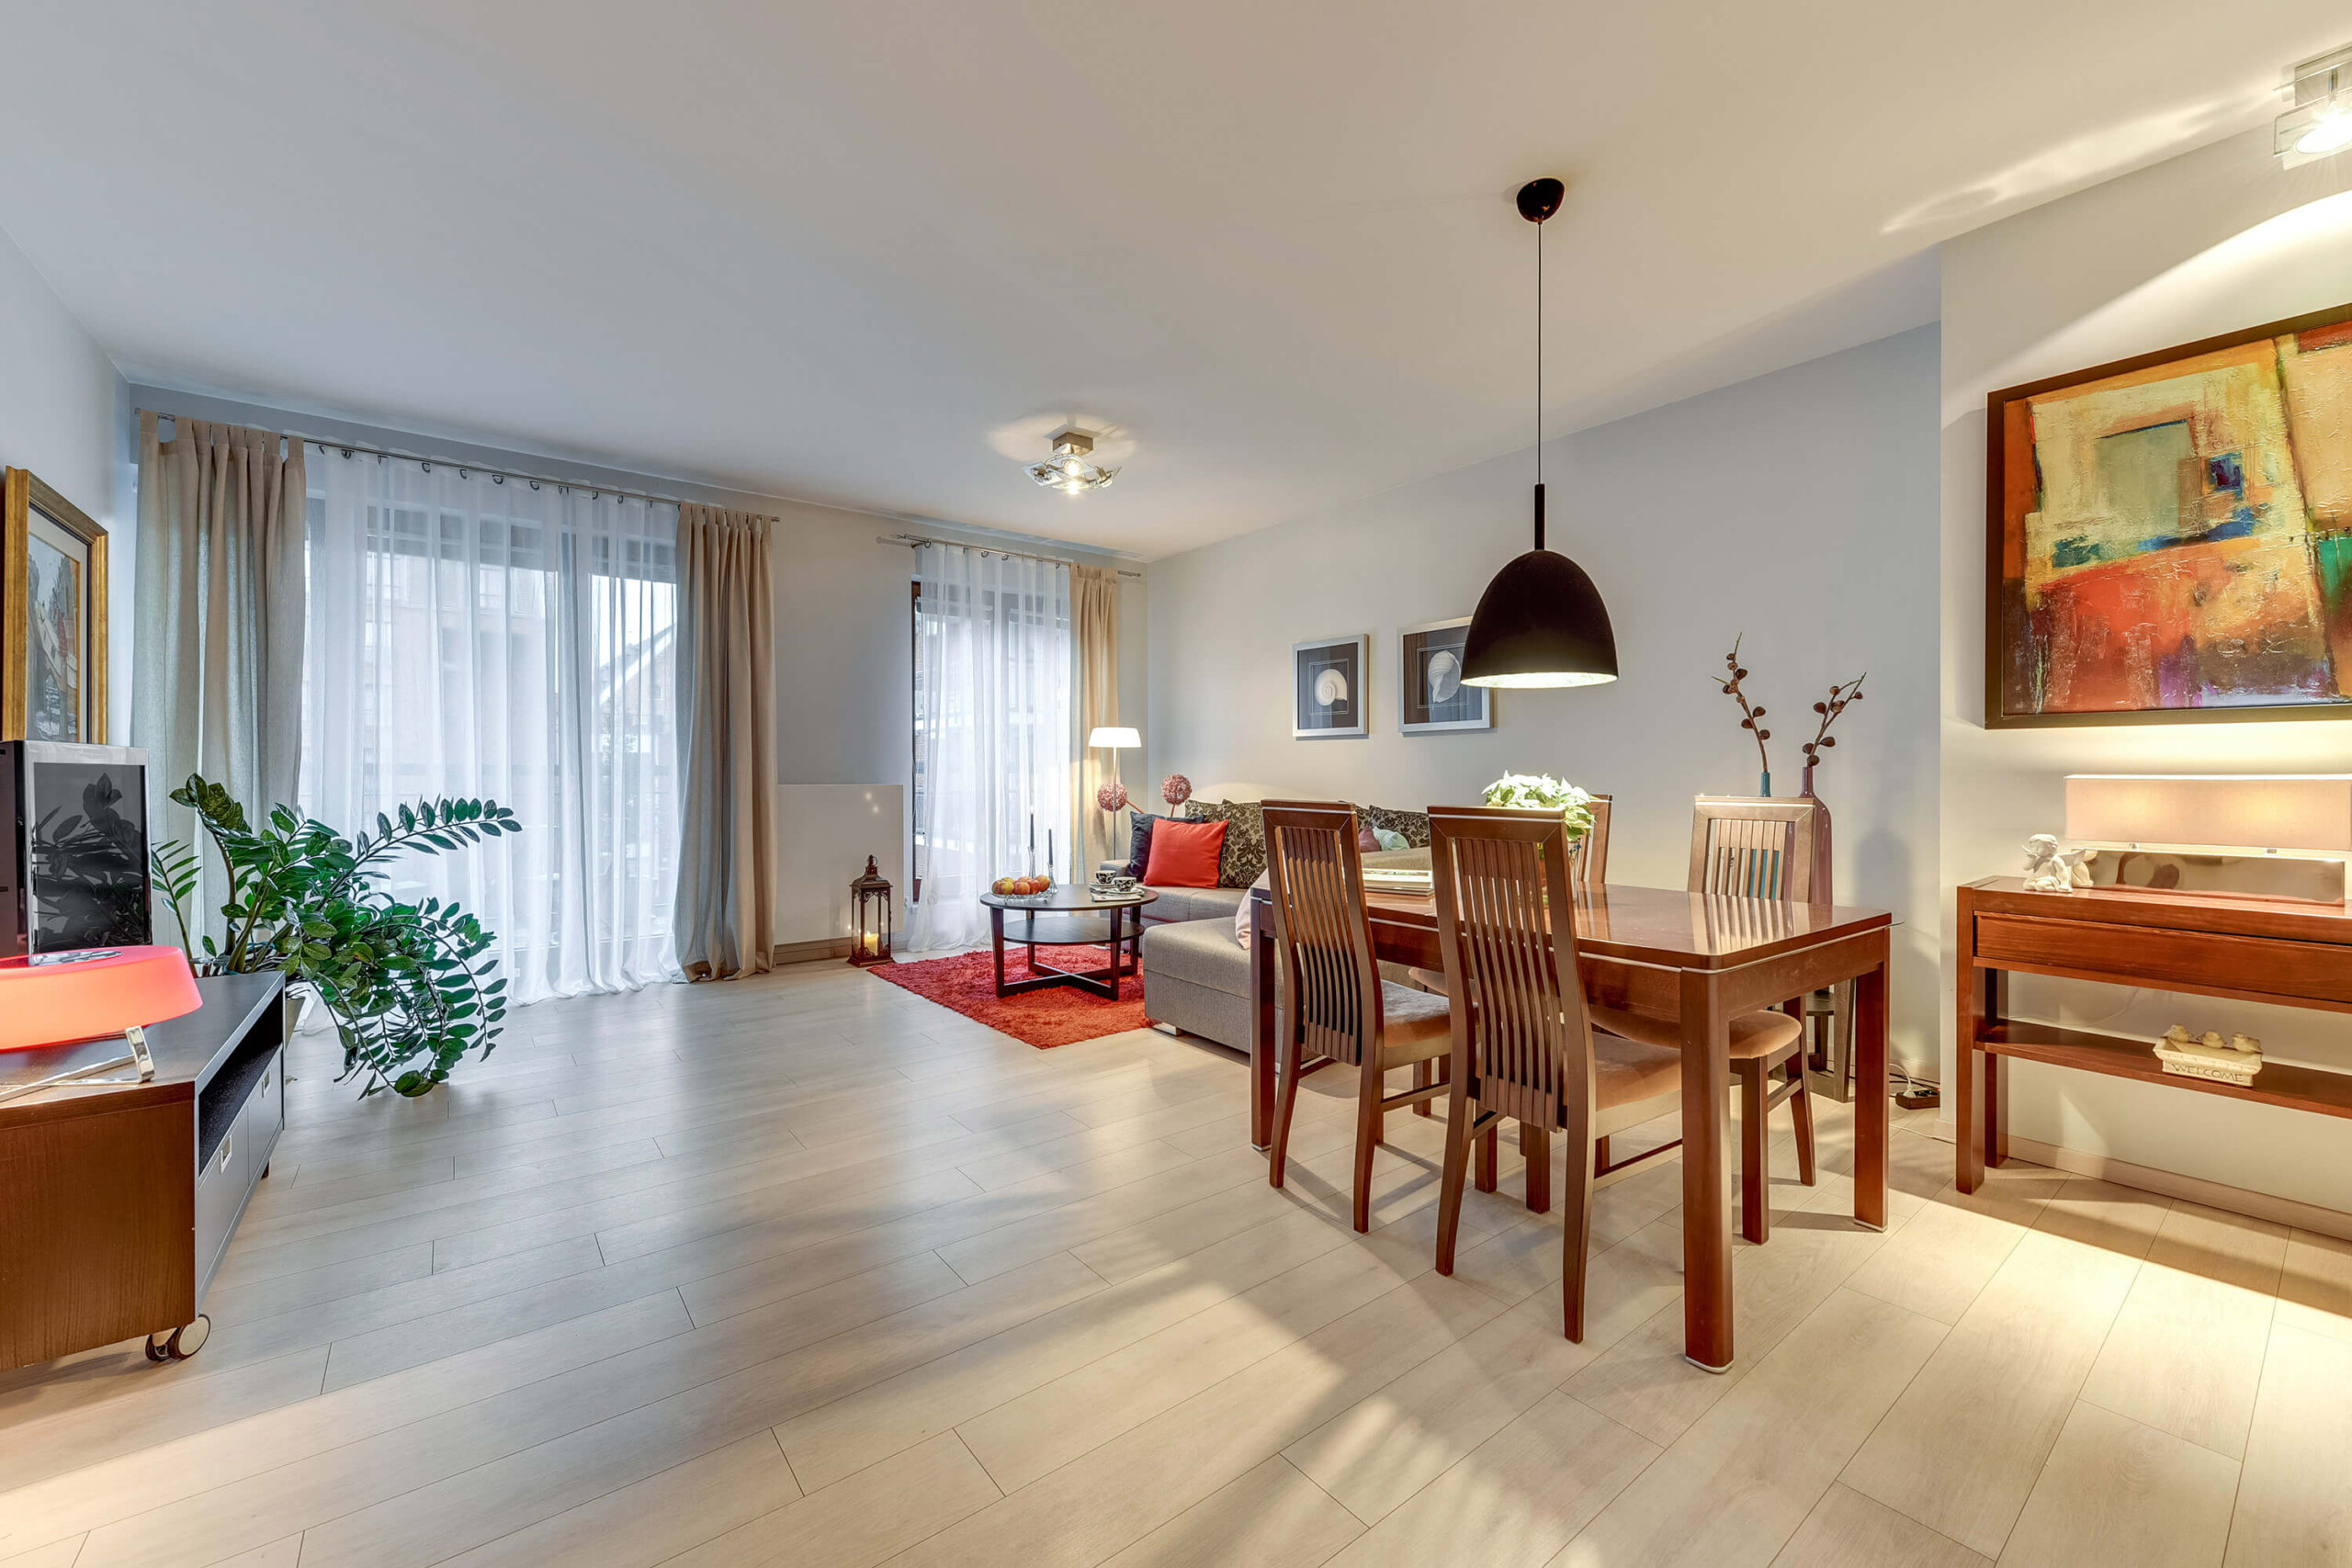 One bedroom apartment for rent in Gdansk Poland - Prime Real Estate